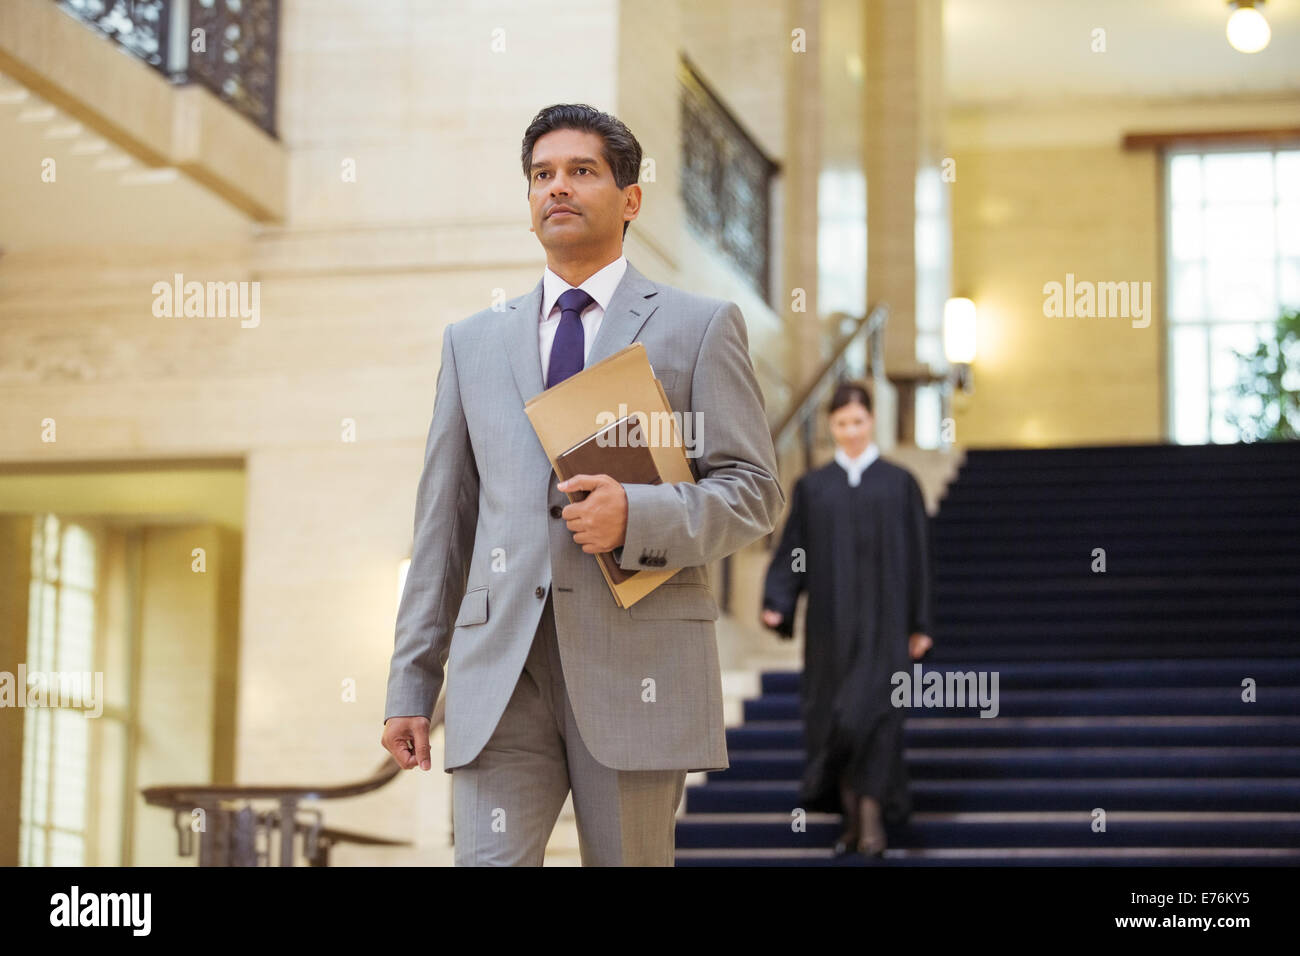 Lawyer walking through courthouse Stock Photo